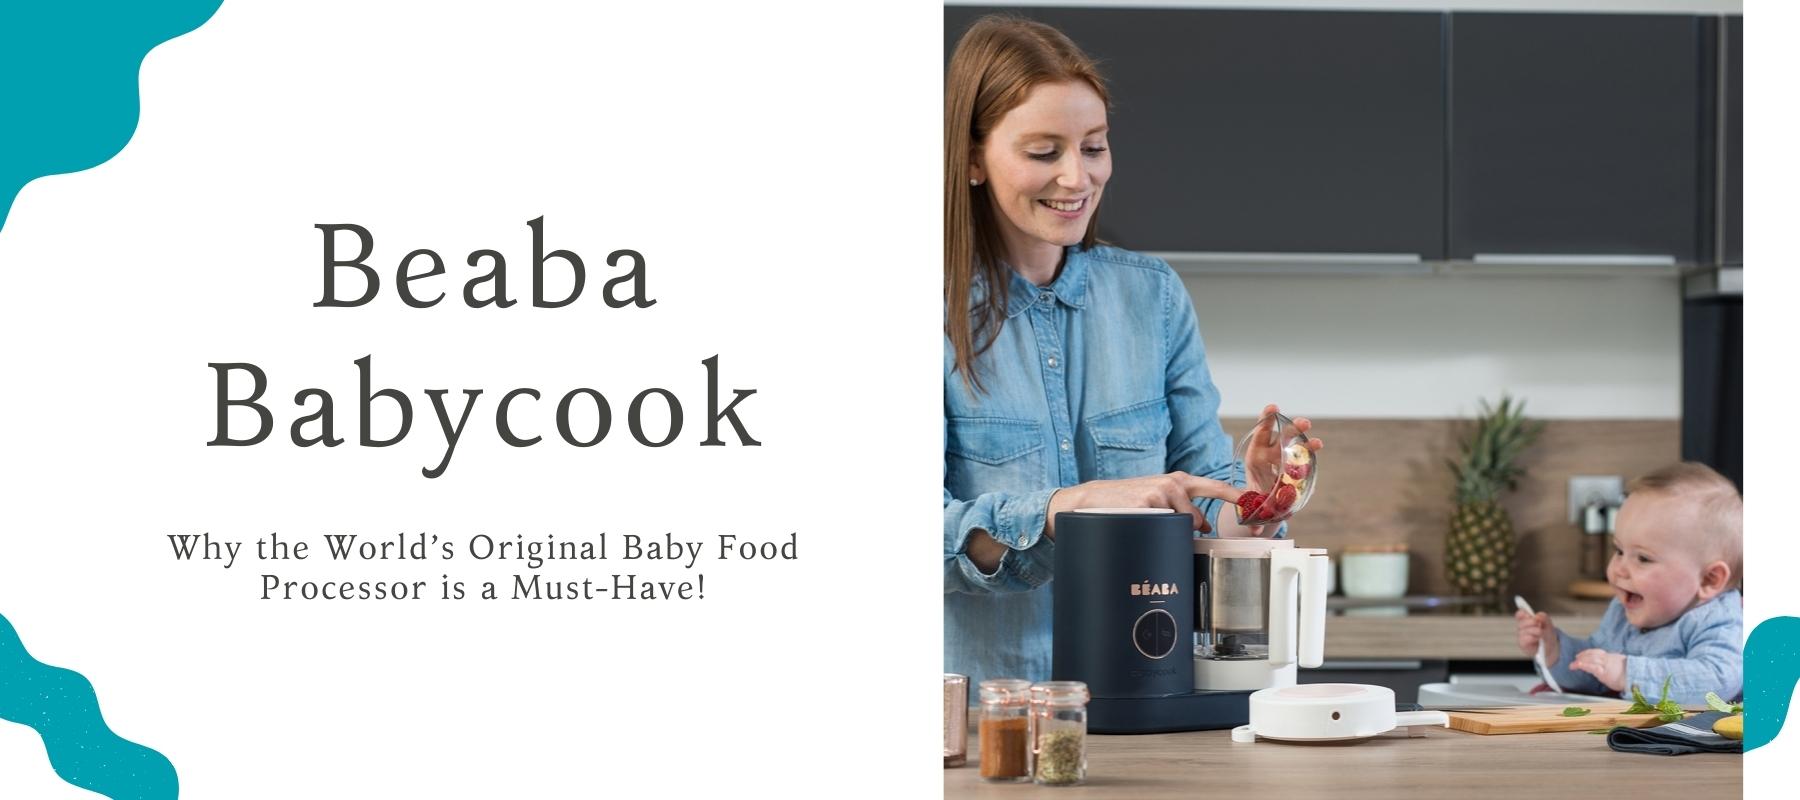 Why I Love the Beaba Babycook